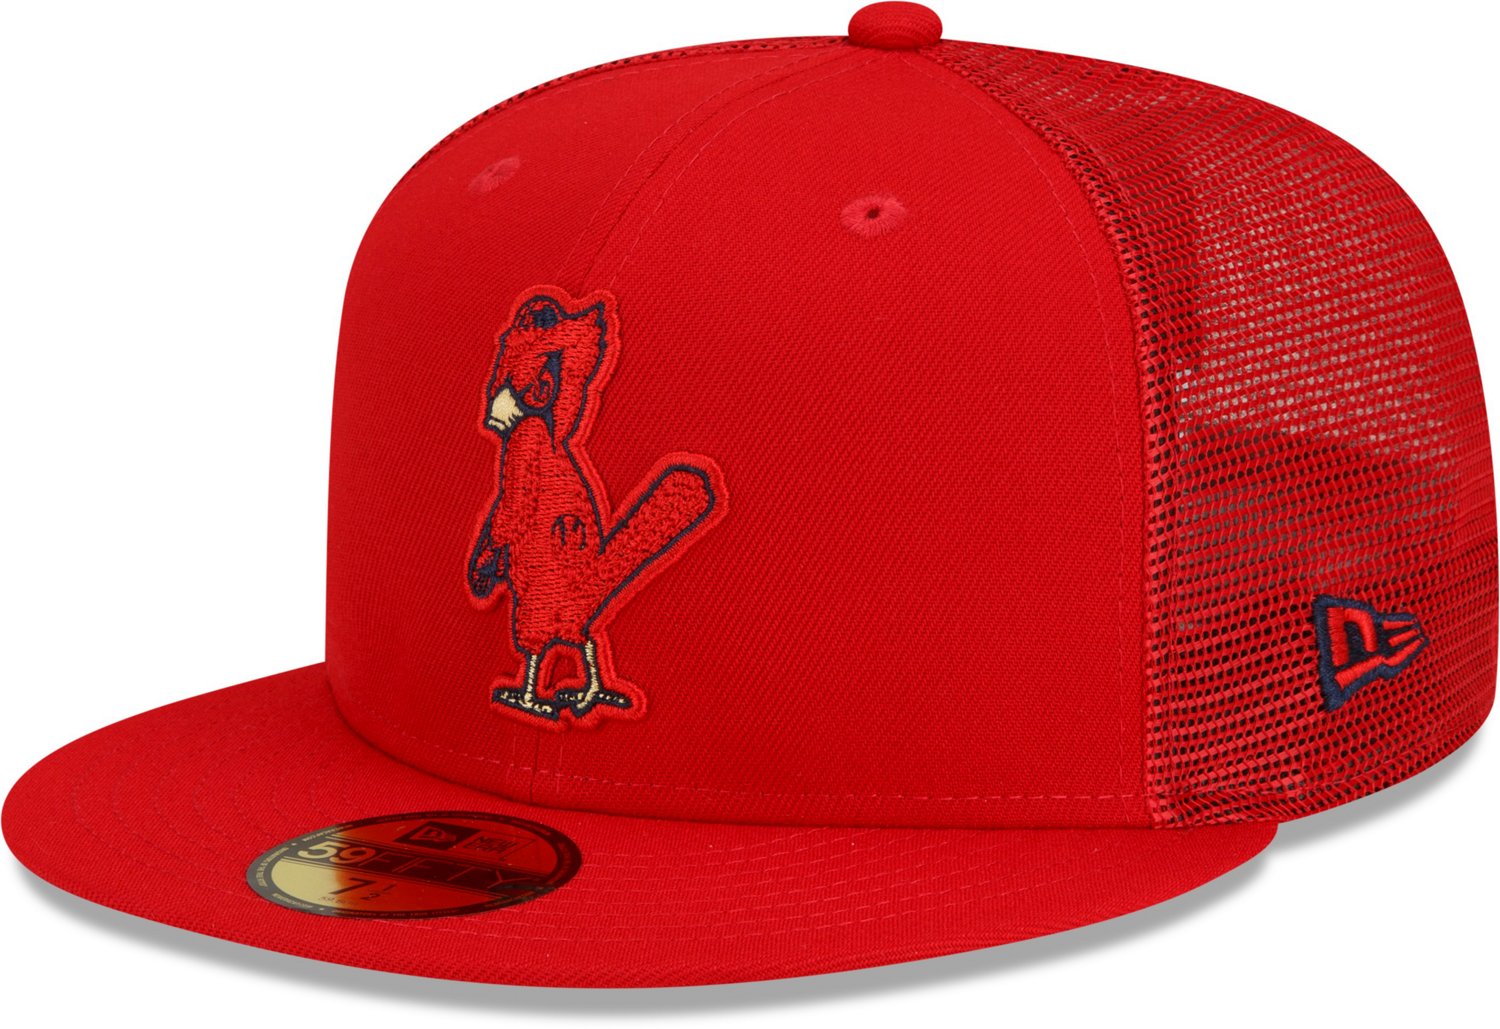 St. Louis Cardinals - Special St. Louis Blues jerseys for batting practice!